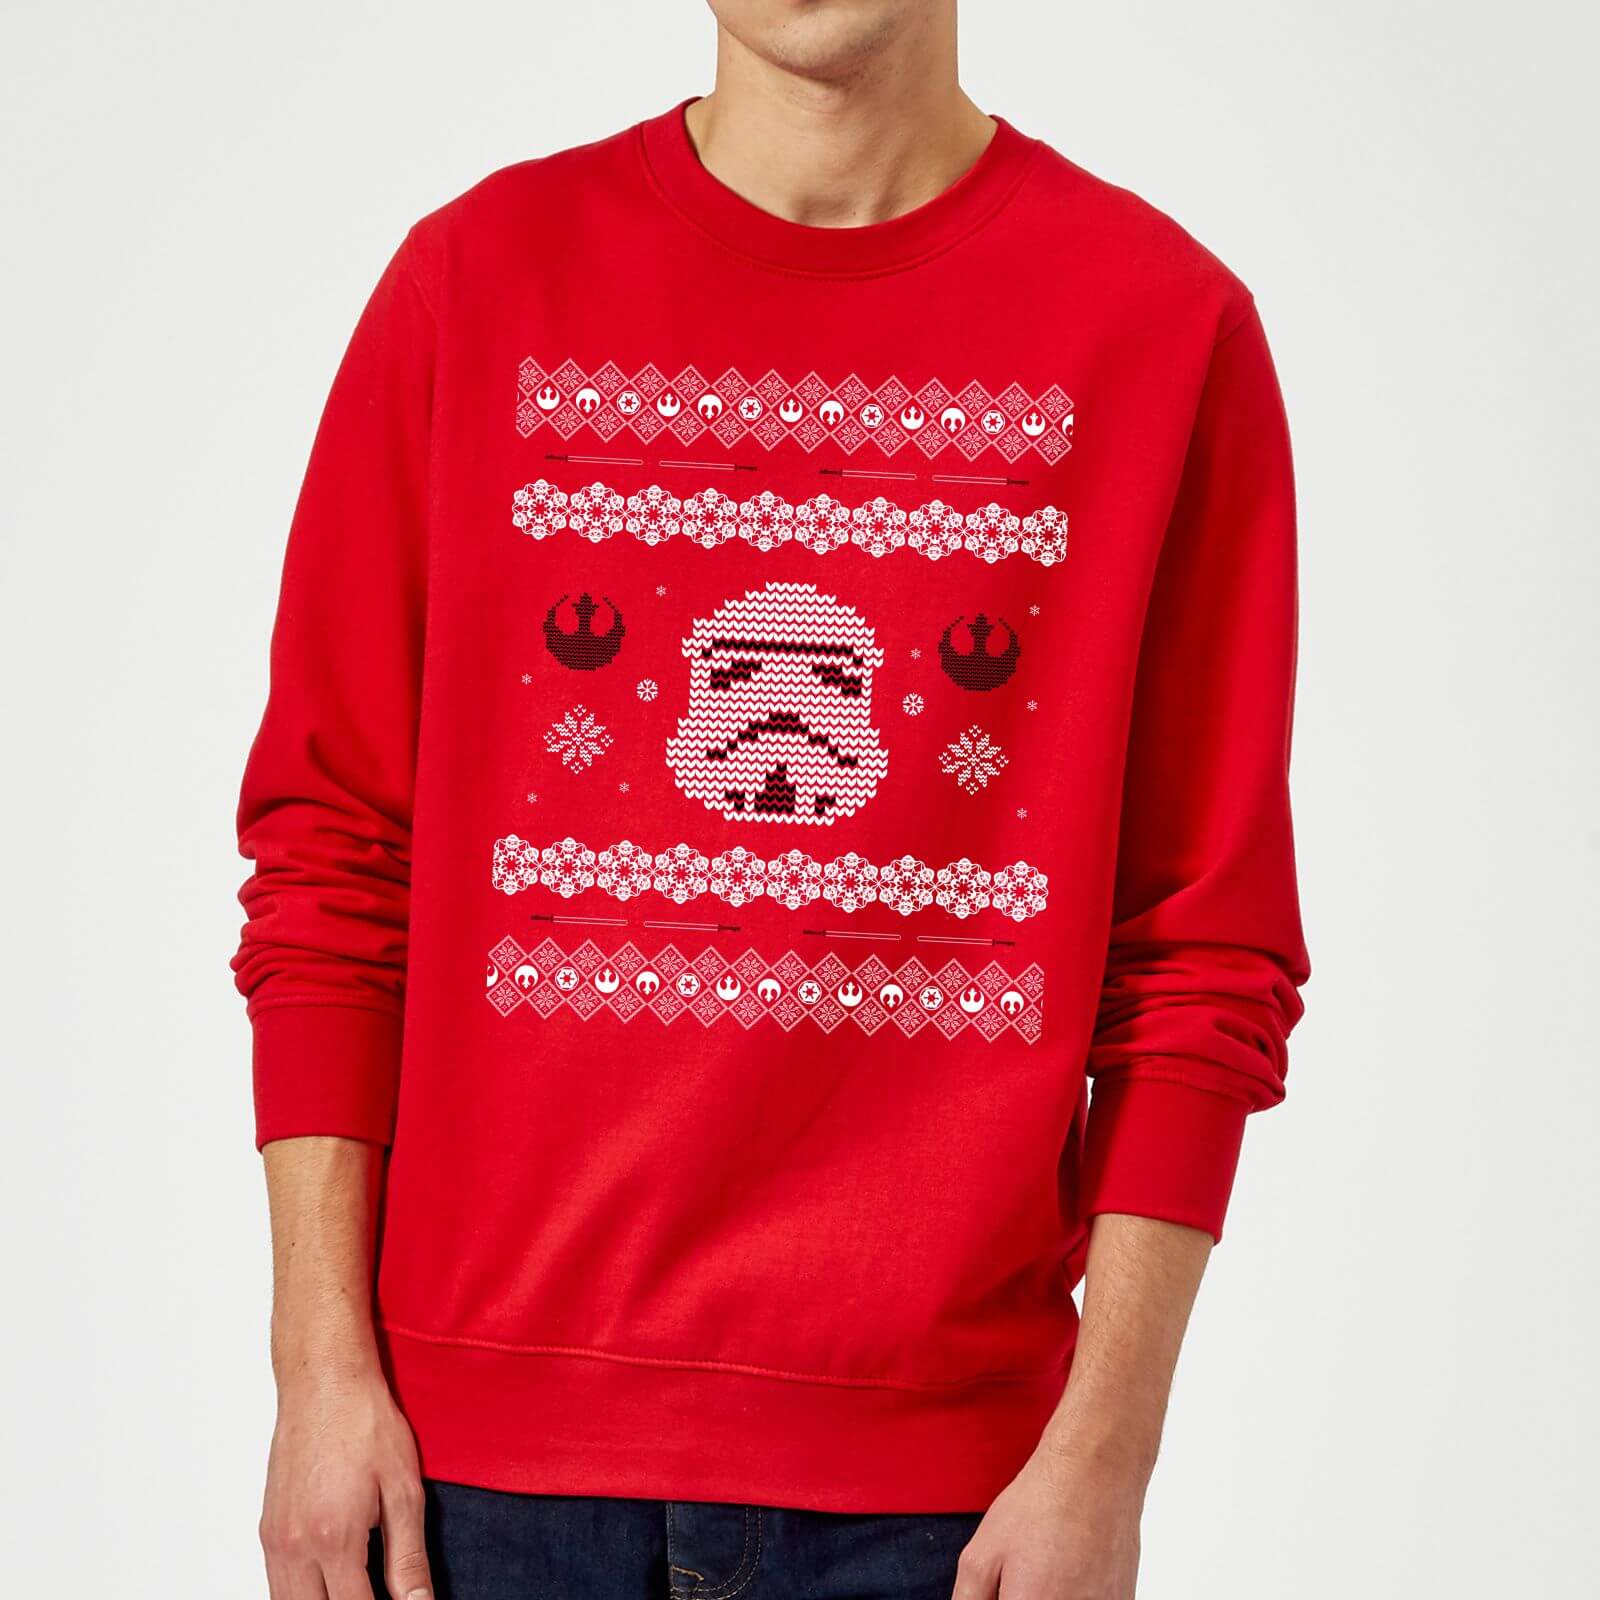 Star Wars Christmas Stormtrooper Knit Red Christmas Sweatshirt - XL - Red